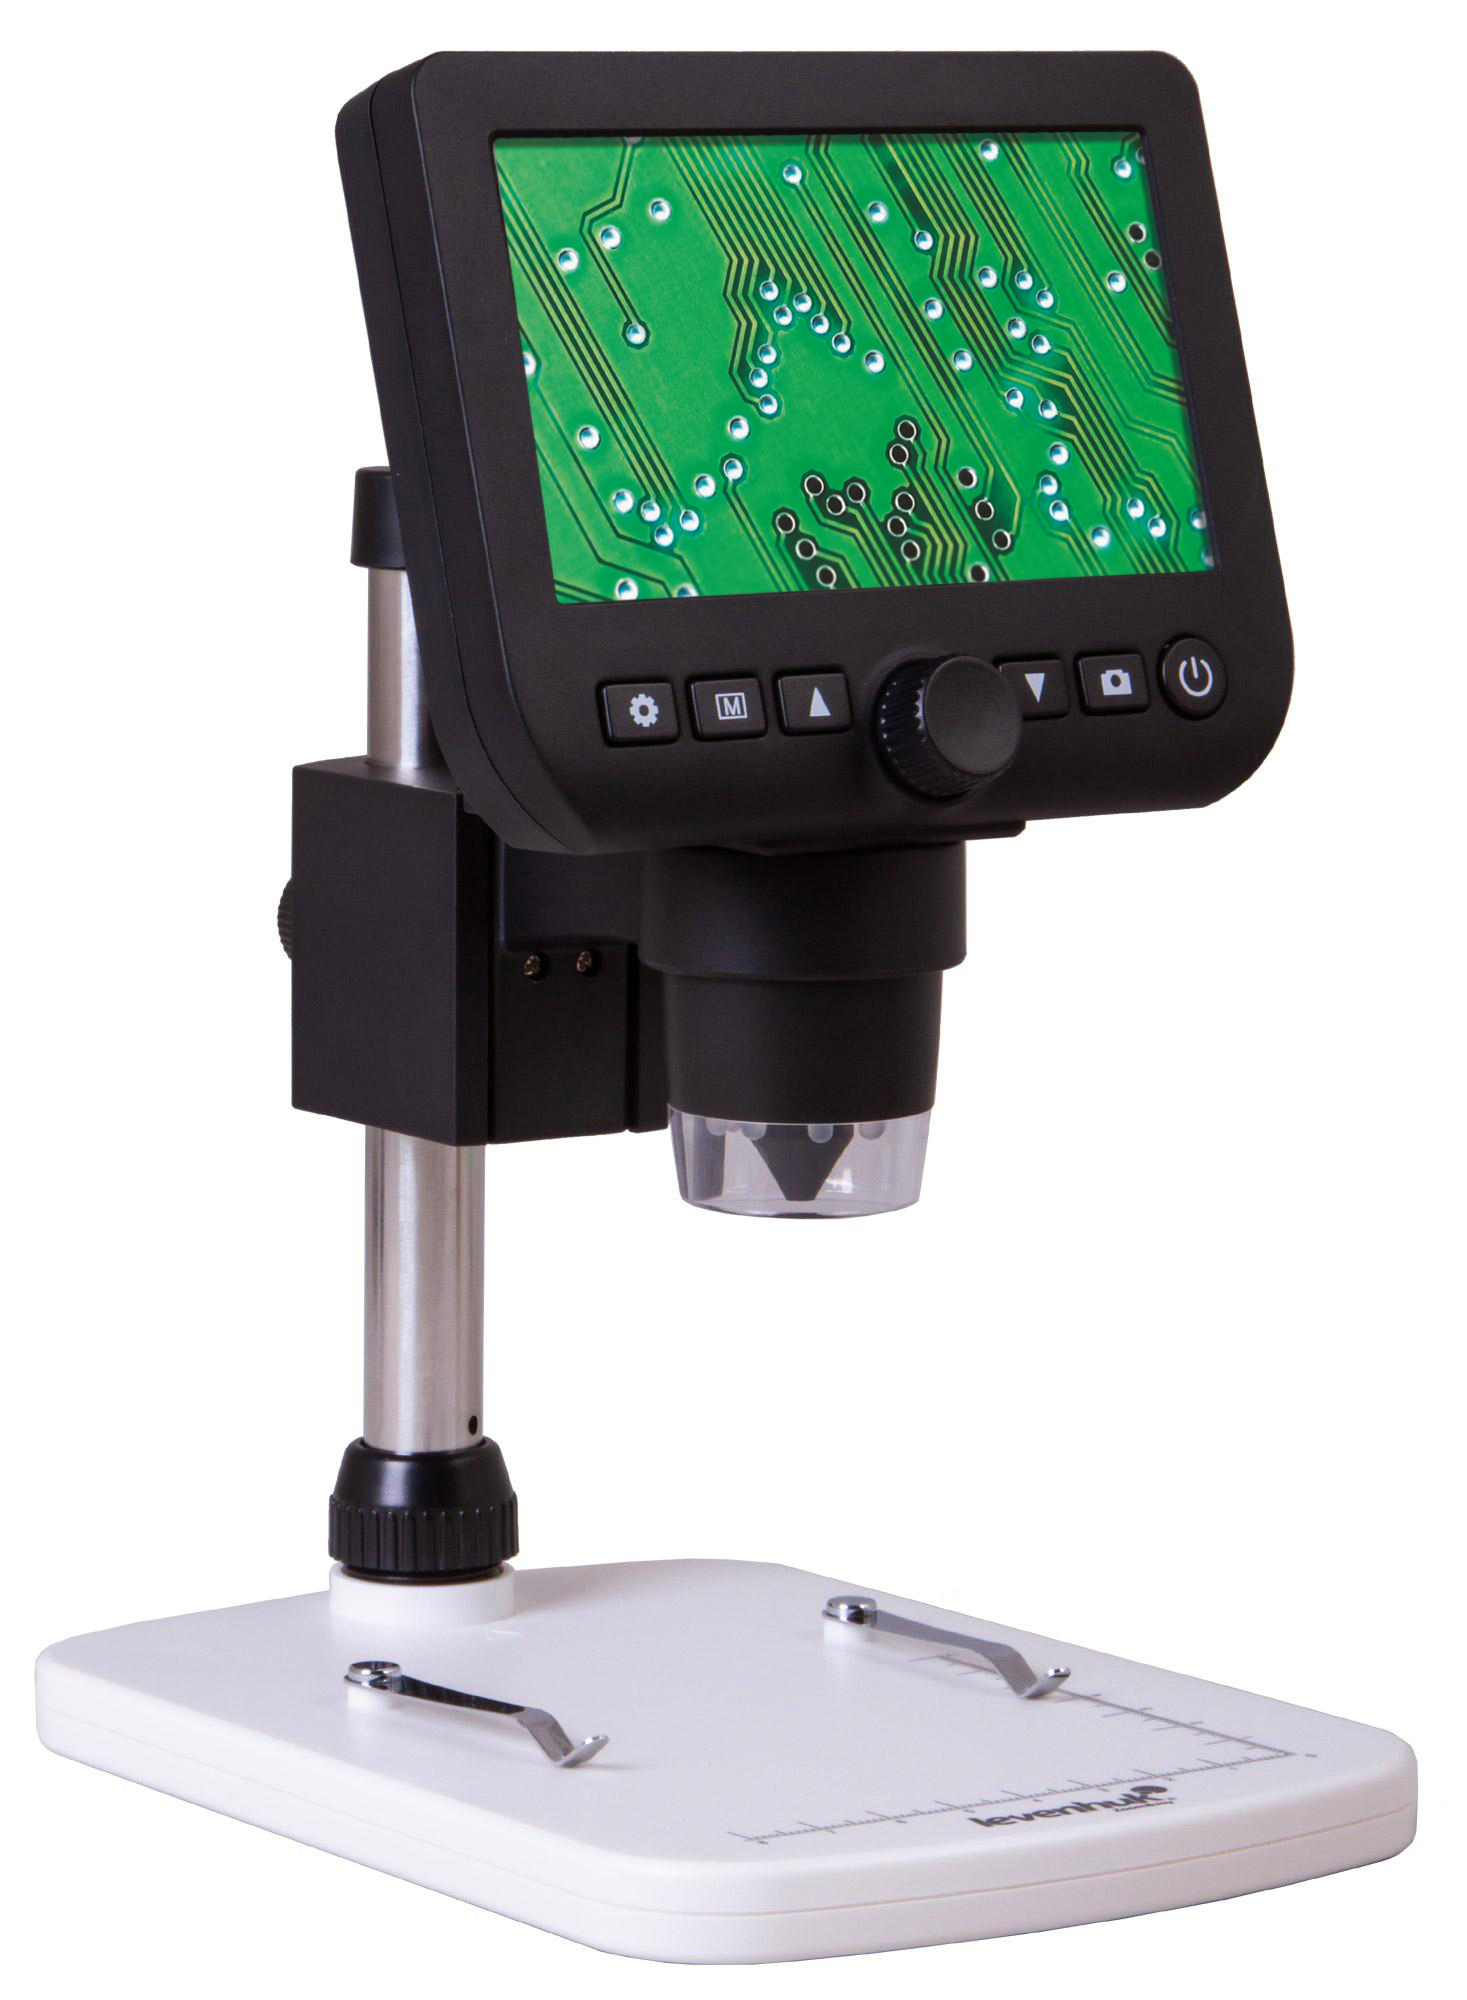 Levenhuk 350 LCD Microscope Buy from the Levenhuk official website in USA